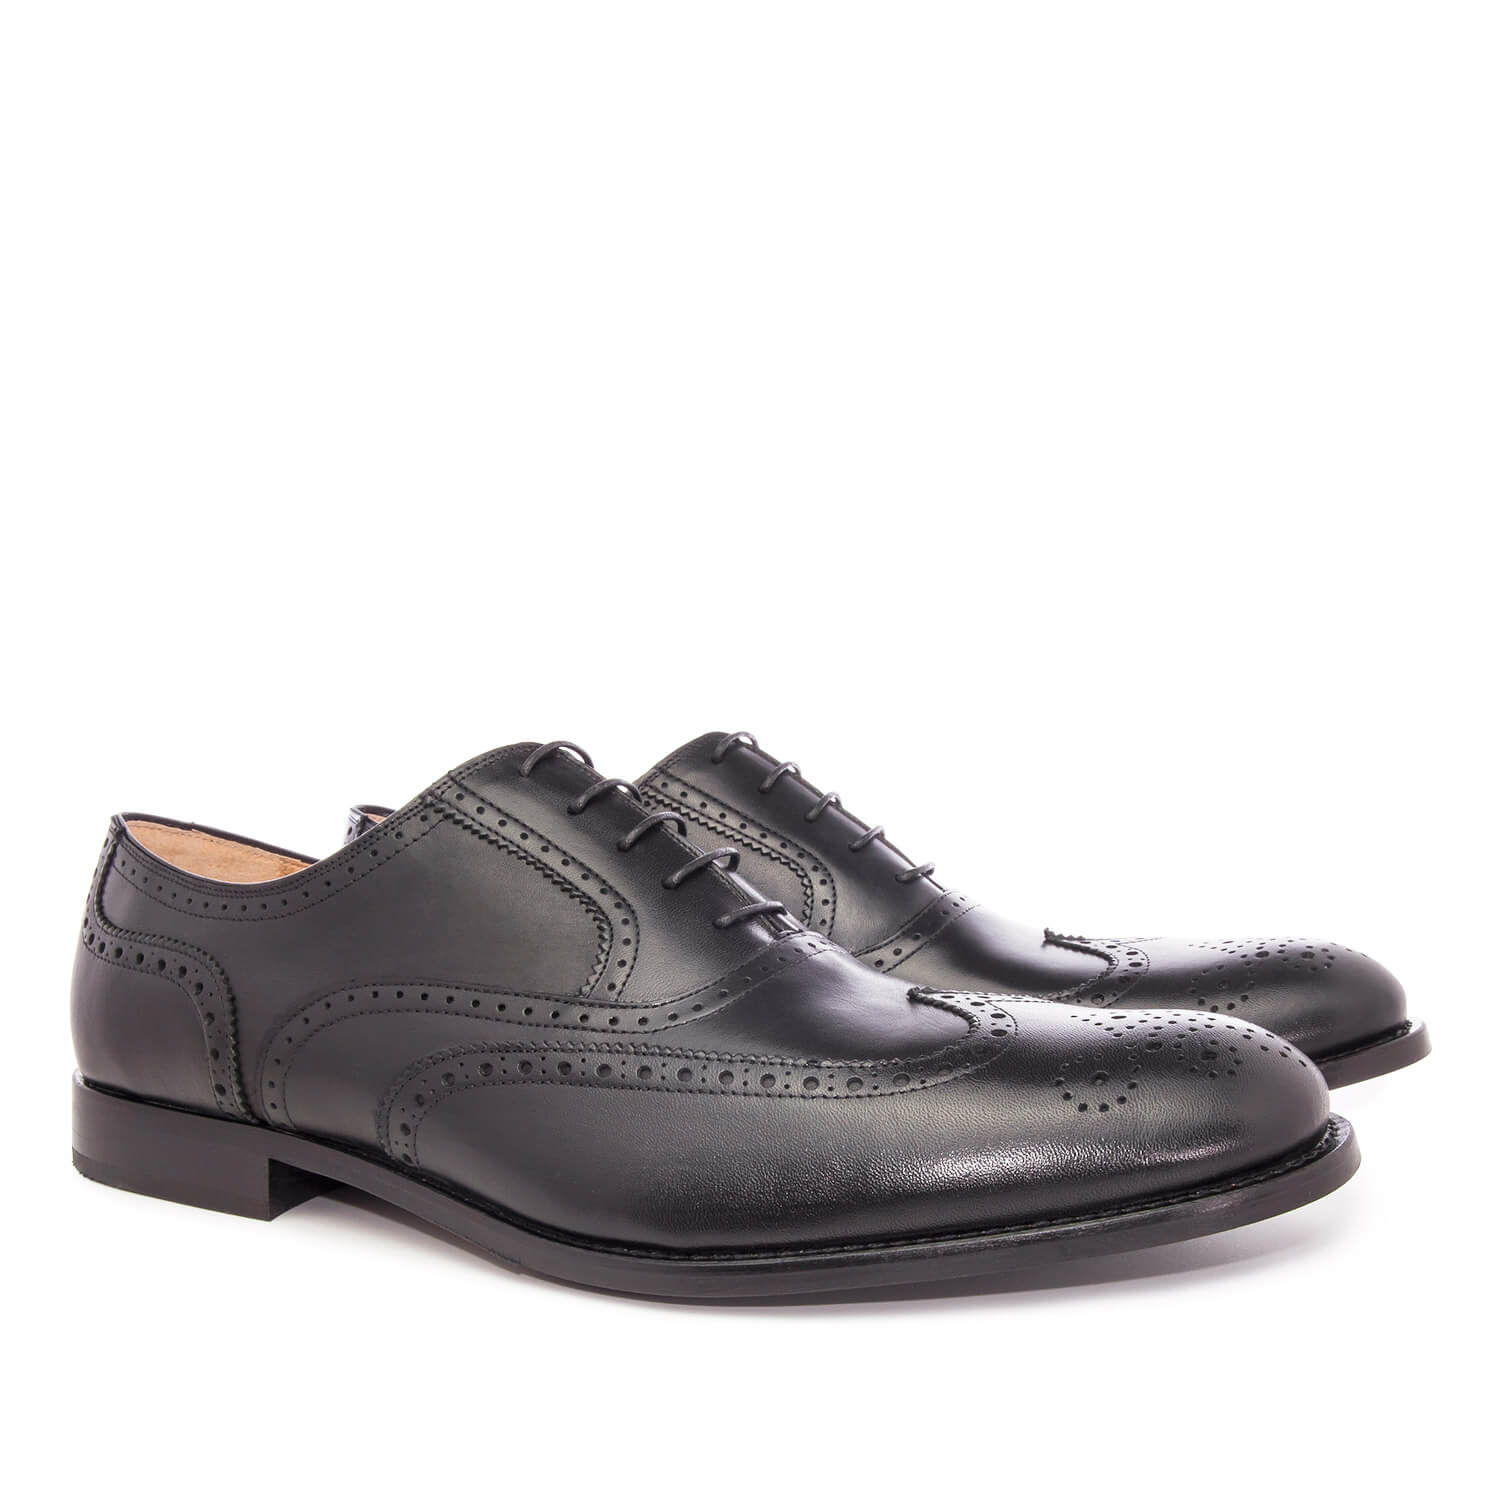 Chaussures Hommes Style Oxford En Cuir Noir 